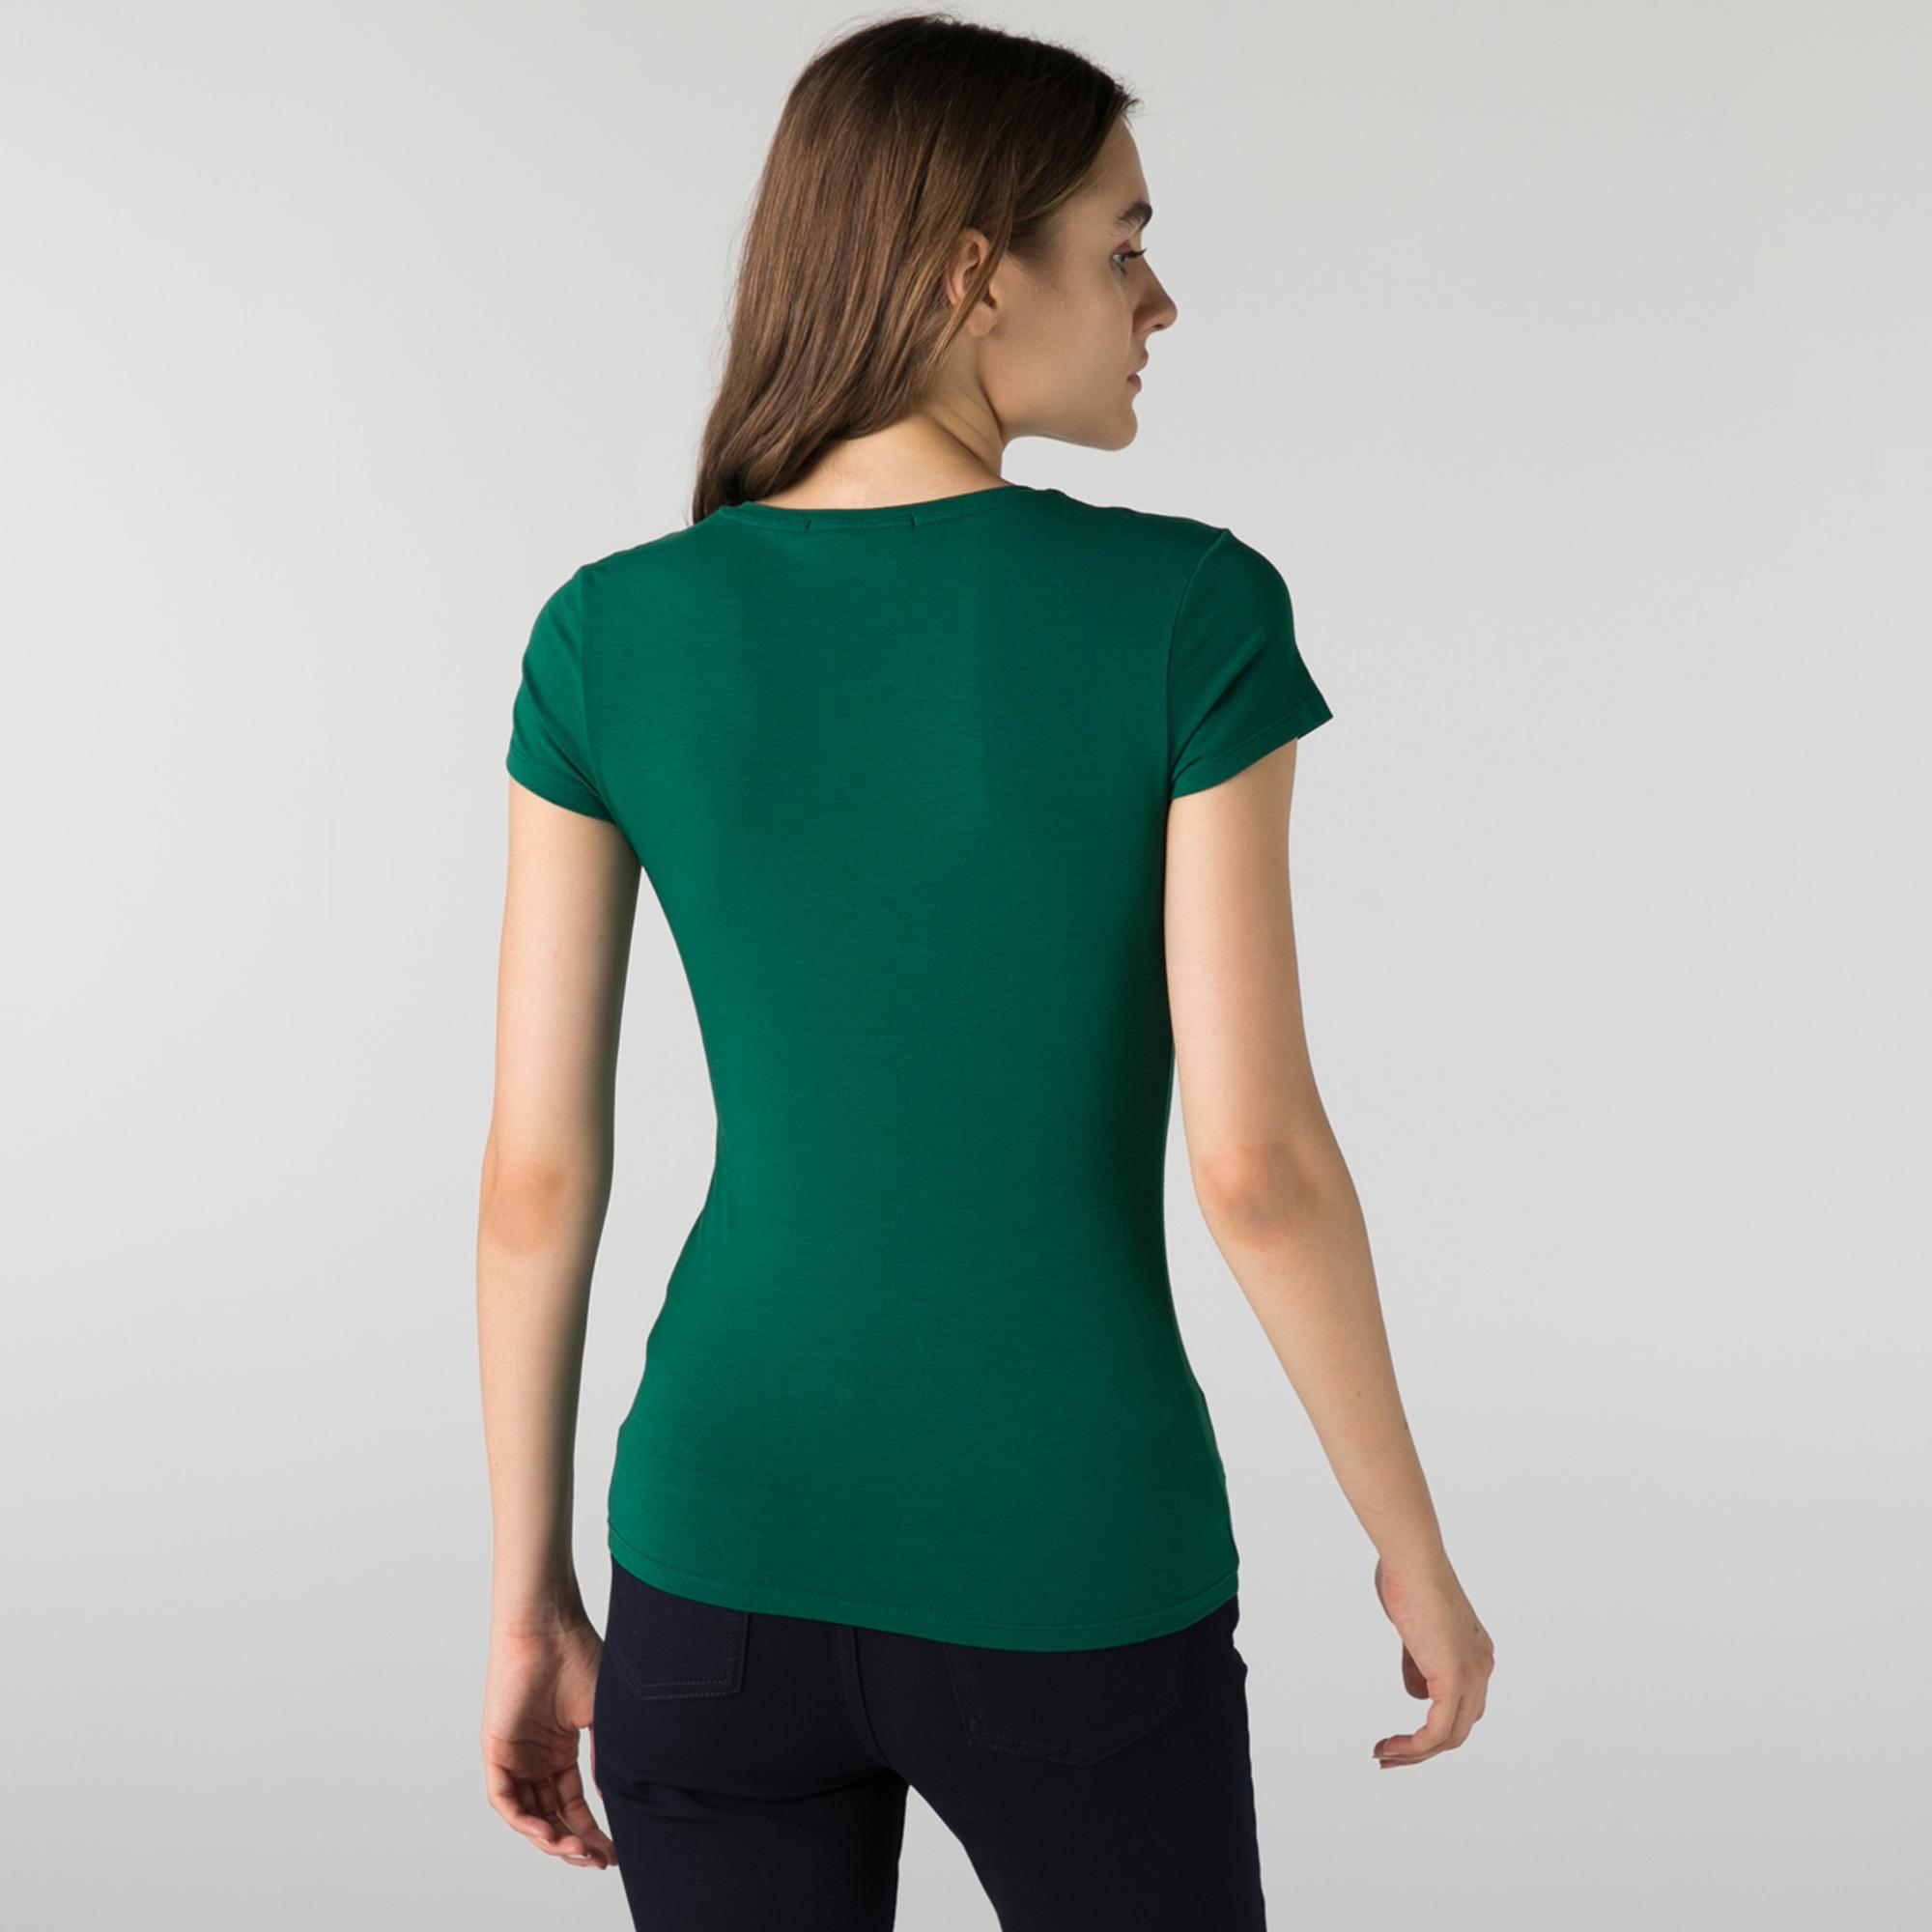 Lacoste Kadın Slim Fit V Yaka Yeşil T-Shirt. 2